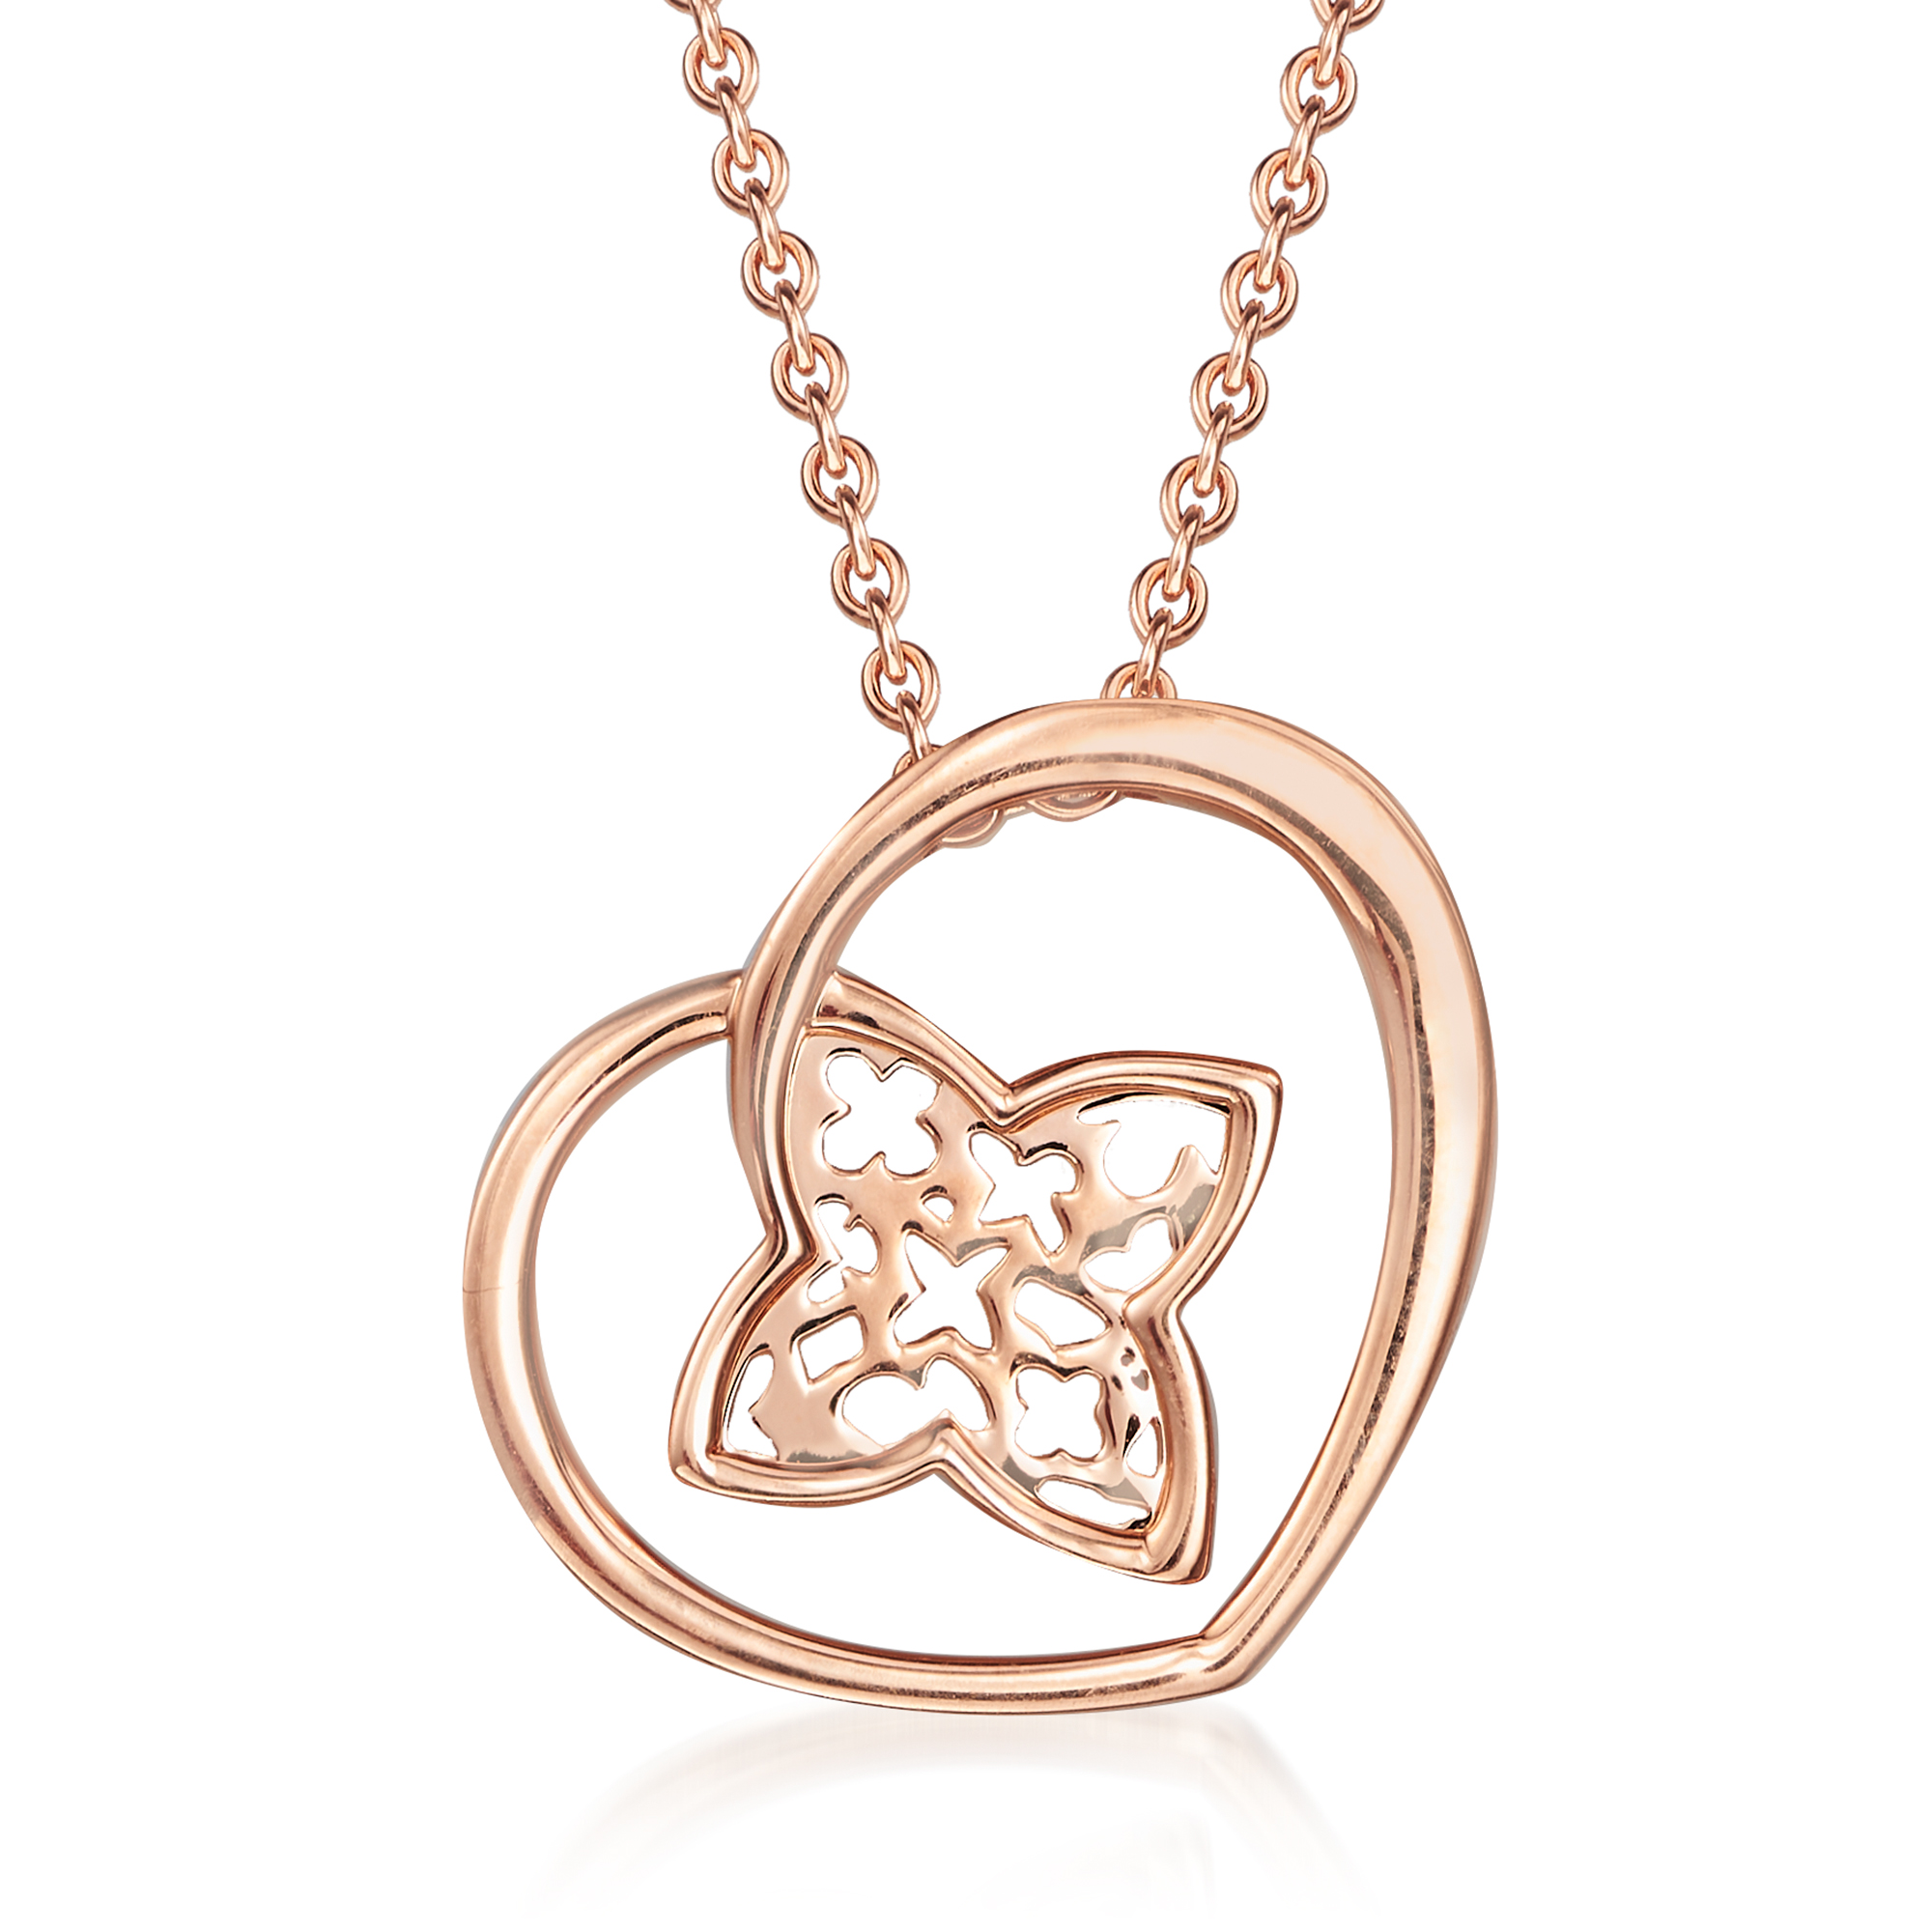 Louis Vuitton Diamond Heart Locket White Gold Pendant Necklace at